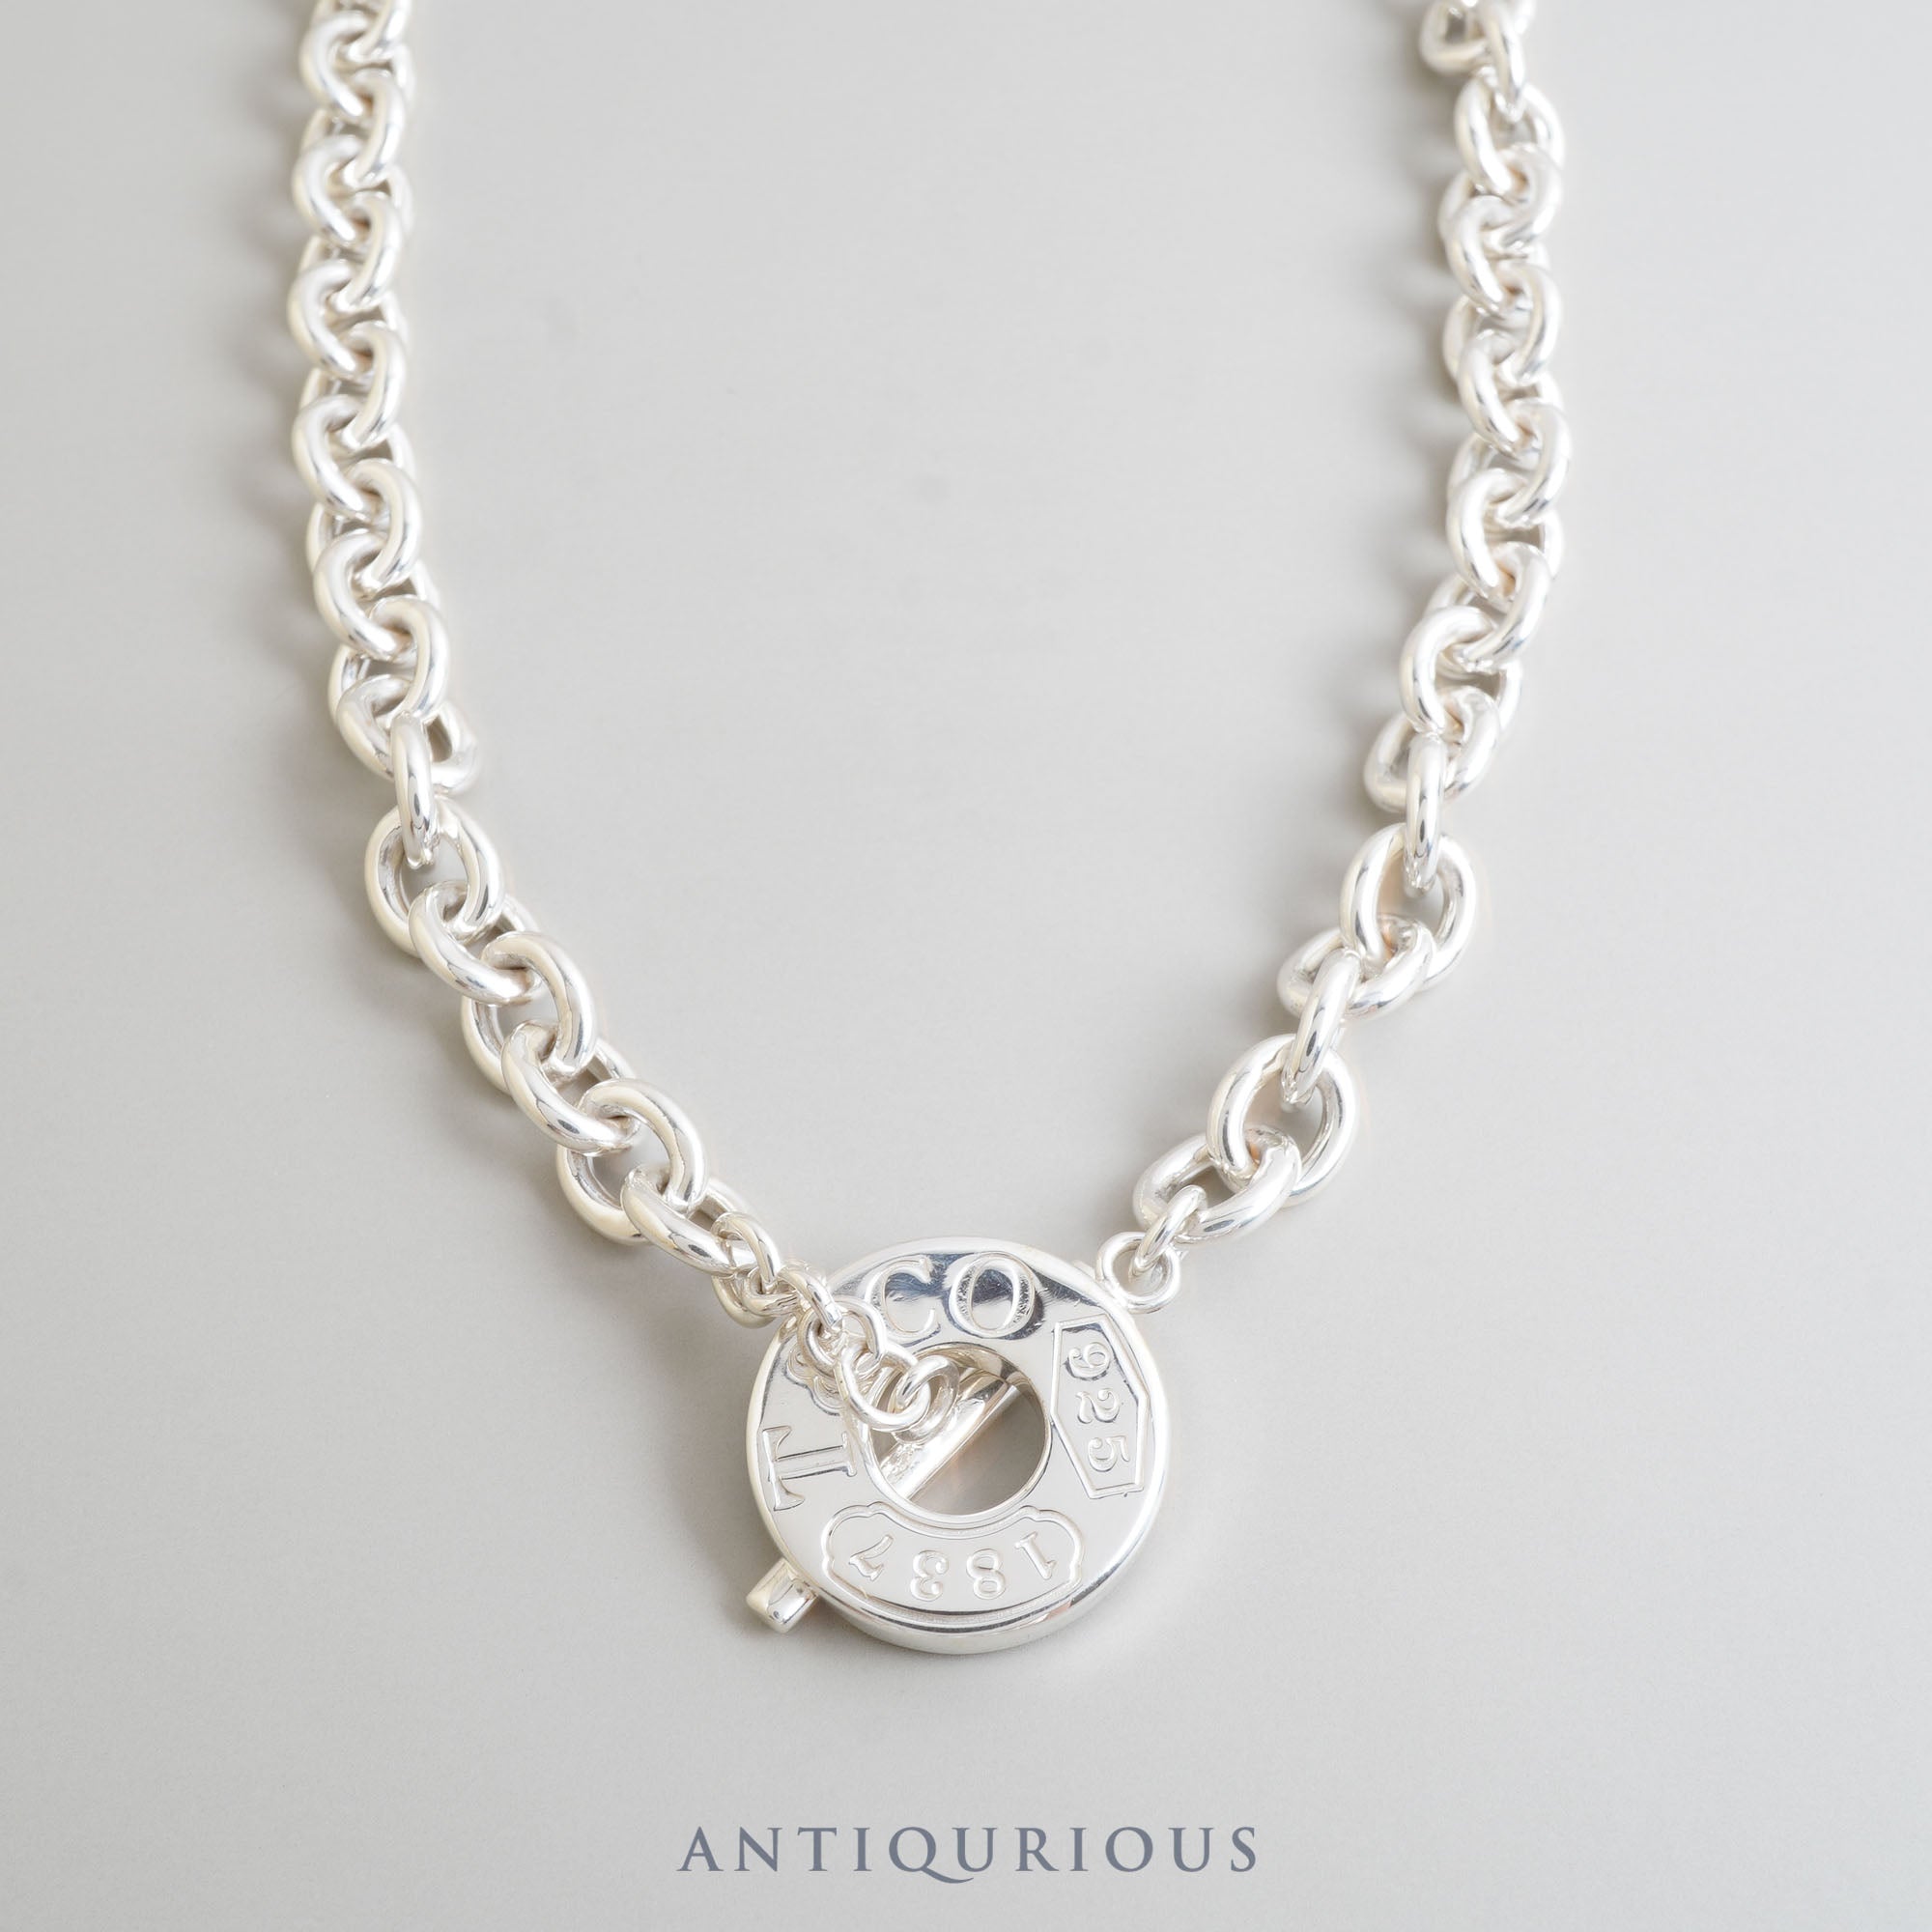 TIFFANY Tiffany necklace and bracelet 1837